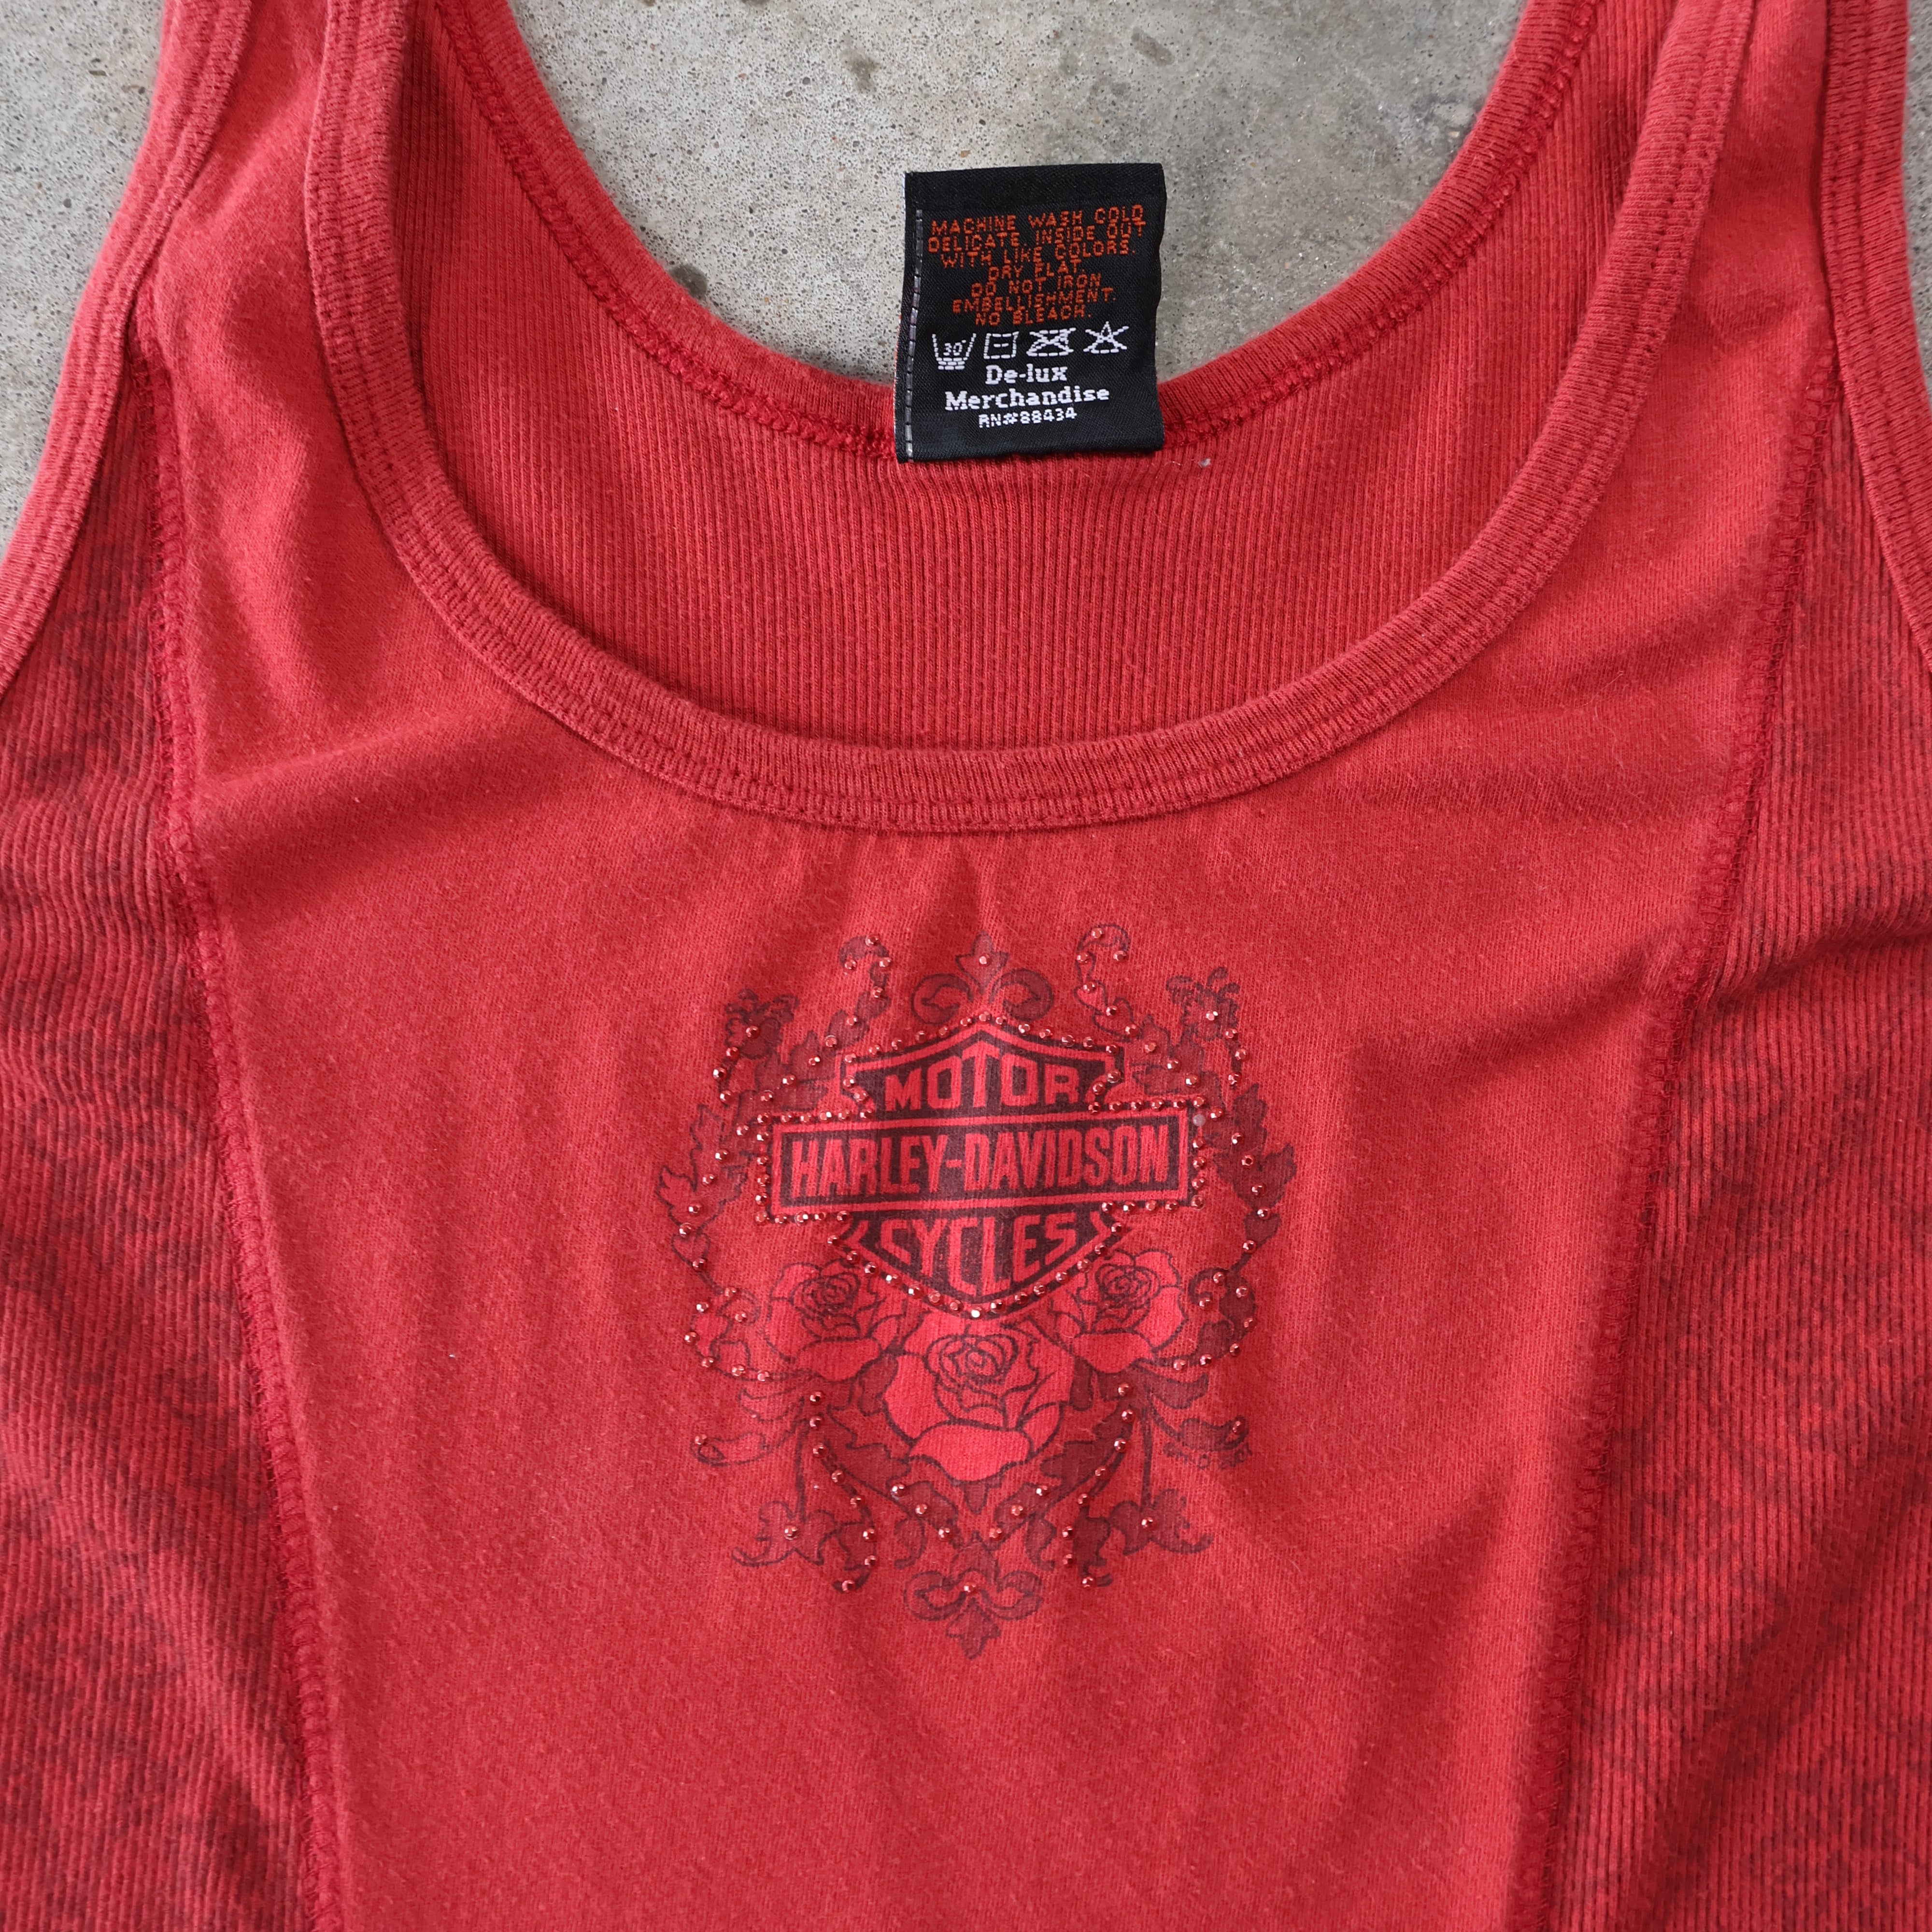 Y2K Red Harley Davidson Rose Tank Top T-Shirt 2001 (Small)